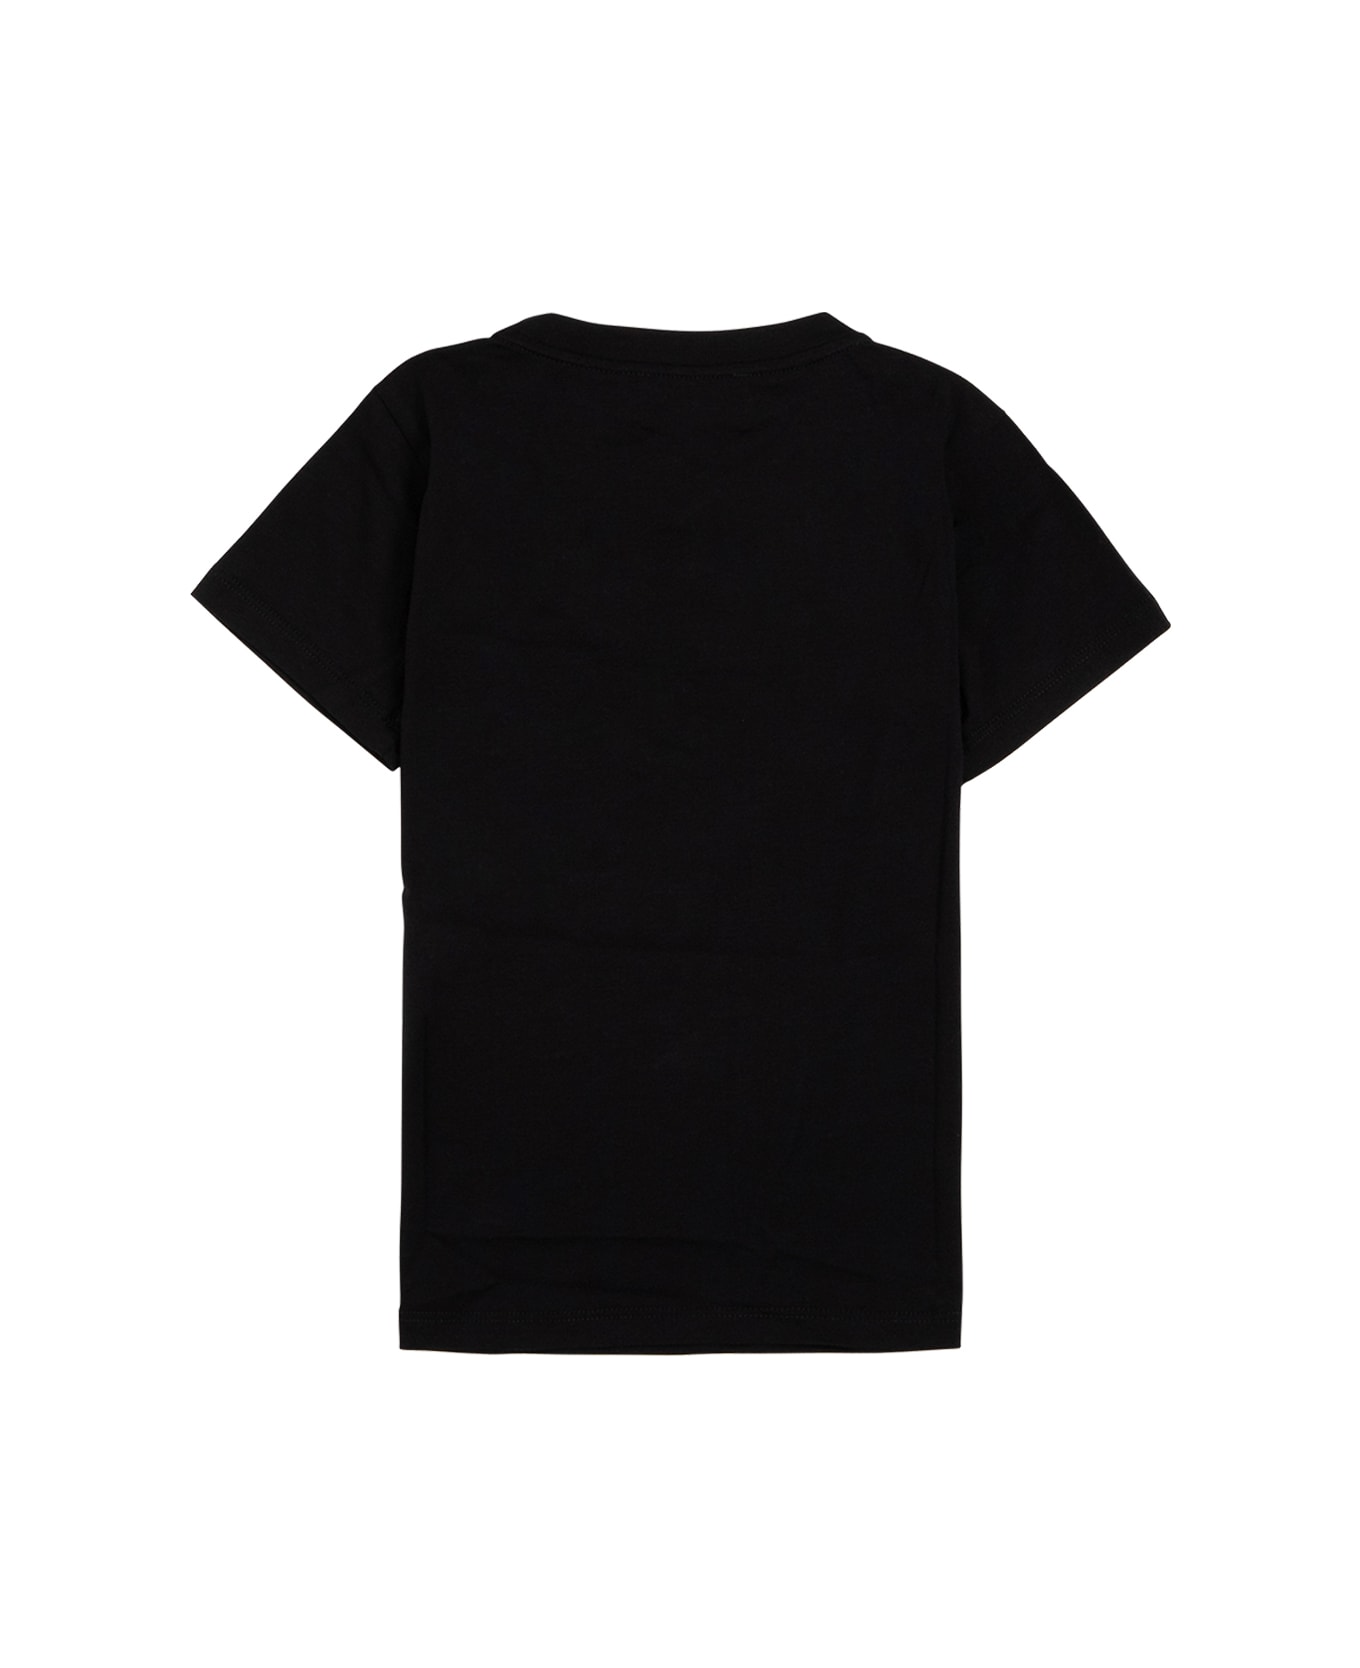 Emporio Armani Armani Kids Baby Boy's Black Jersey T-shirt With Contrasting Logo - Black